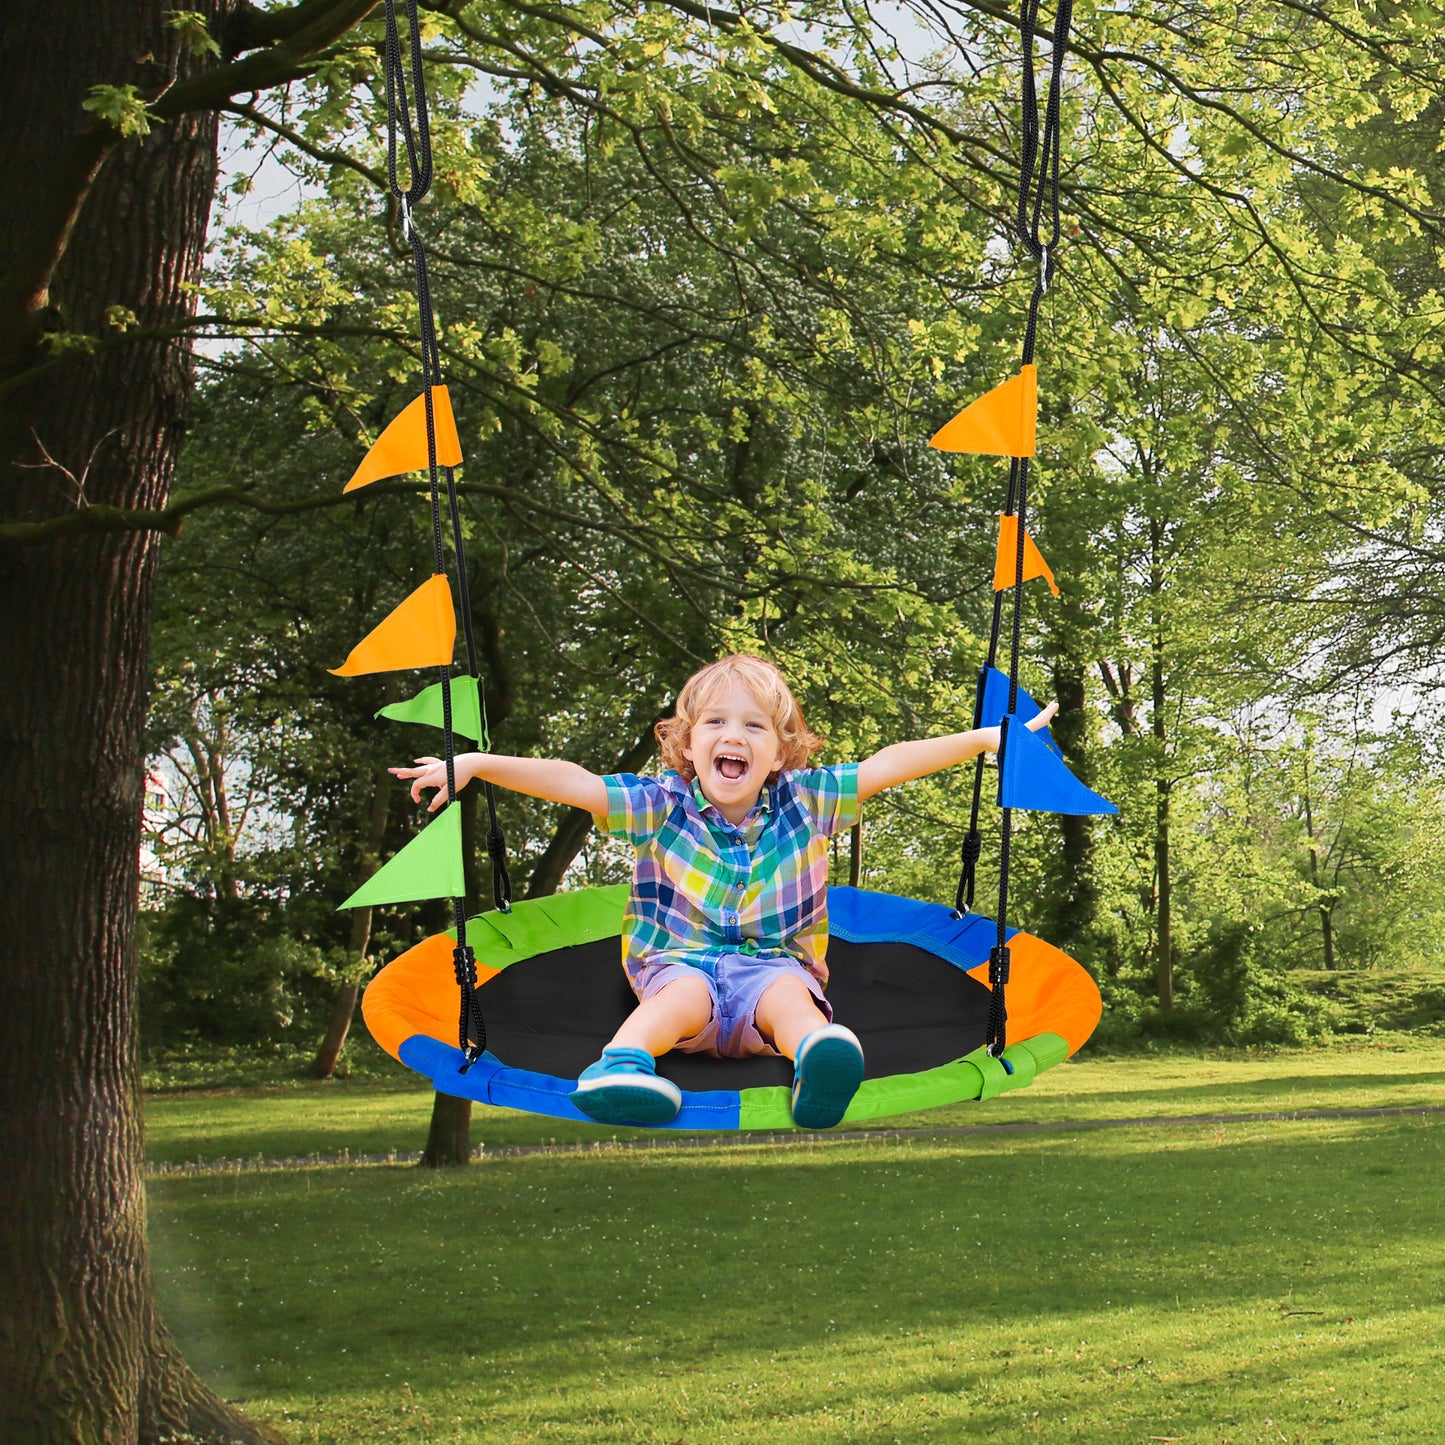 Outsunny Kids' Tree Swing: Adjustable Rope & Waterproof Seat on Steel Frame for Backyard Play, Green